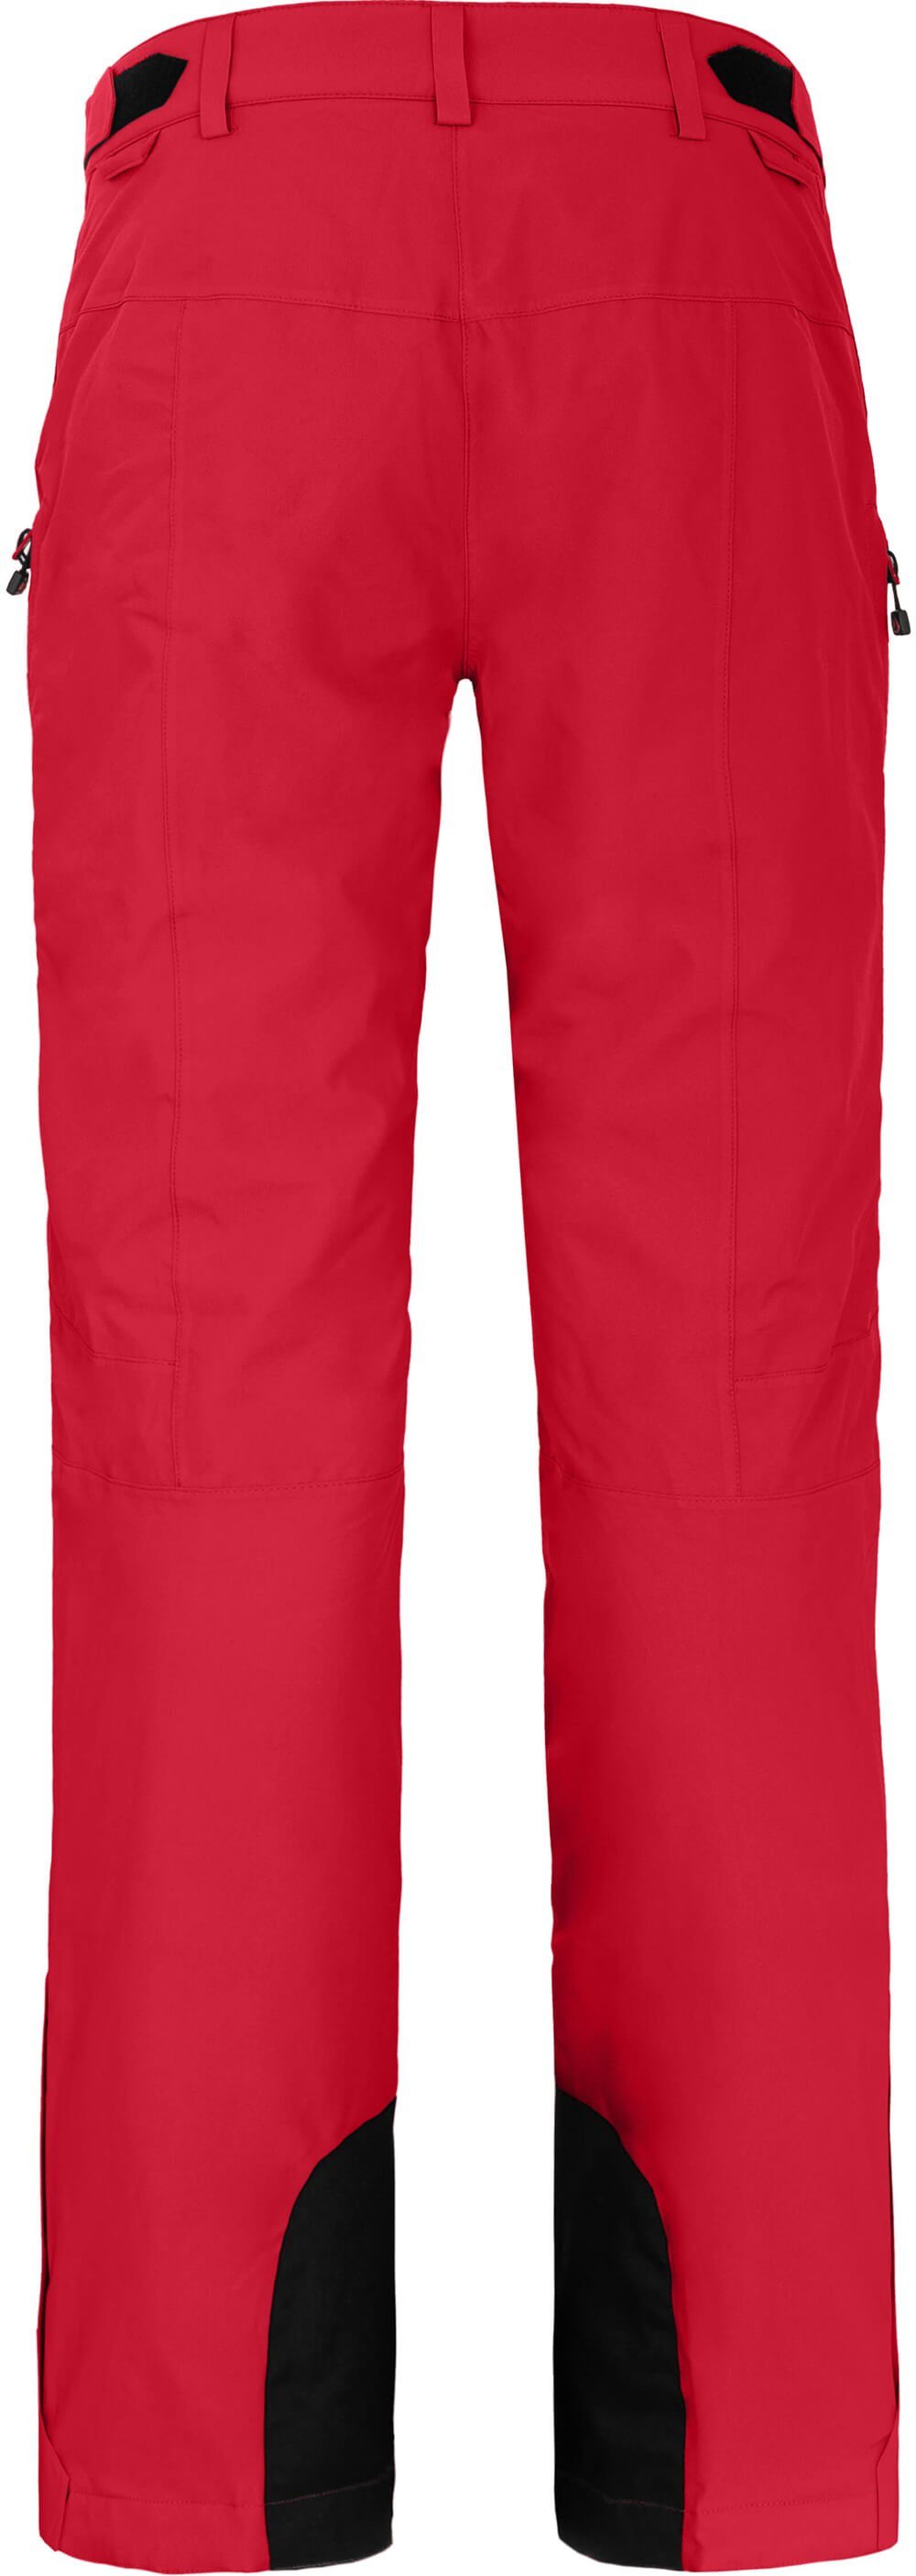 Bergson Skihose ICE Skihose, 20000 China rot unwattiert, light Wassersäule, Damen mm Kurzgrößen